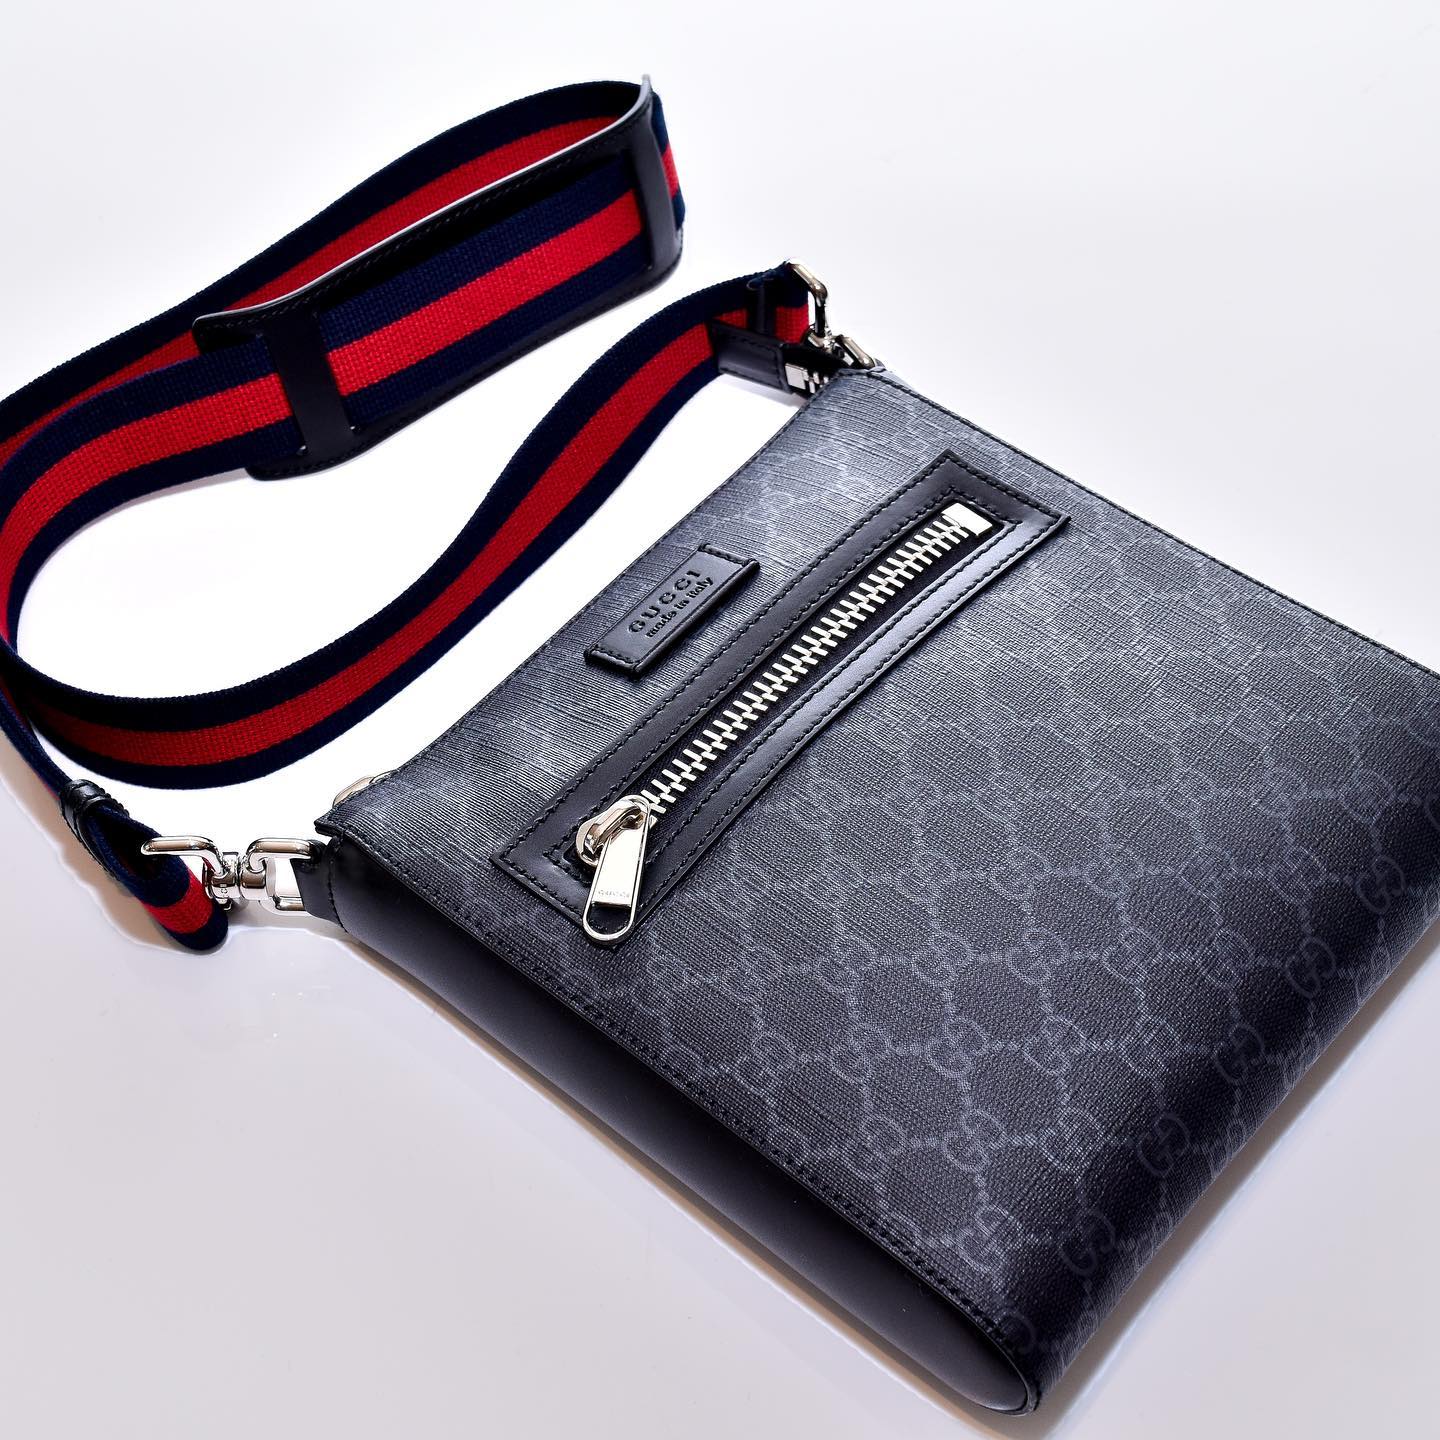 BAG Gucci GG Messenger Bag. Free worldwide shipping available.jpg